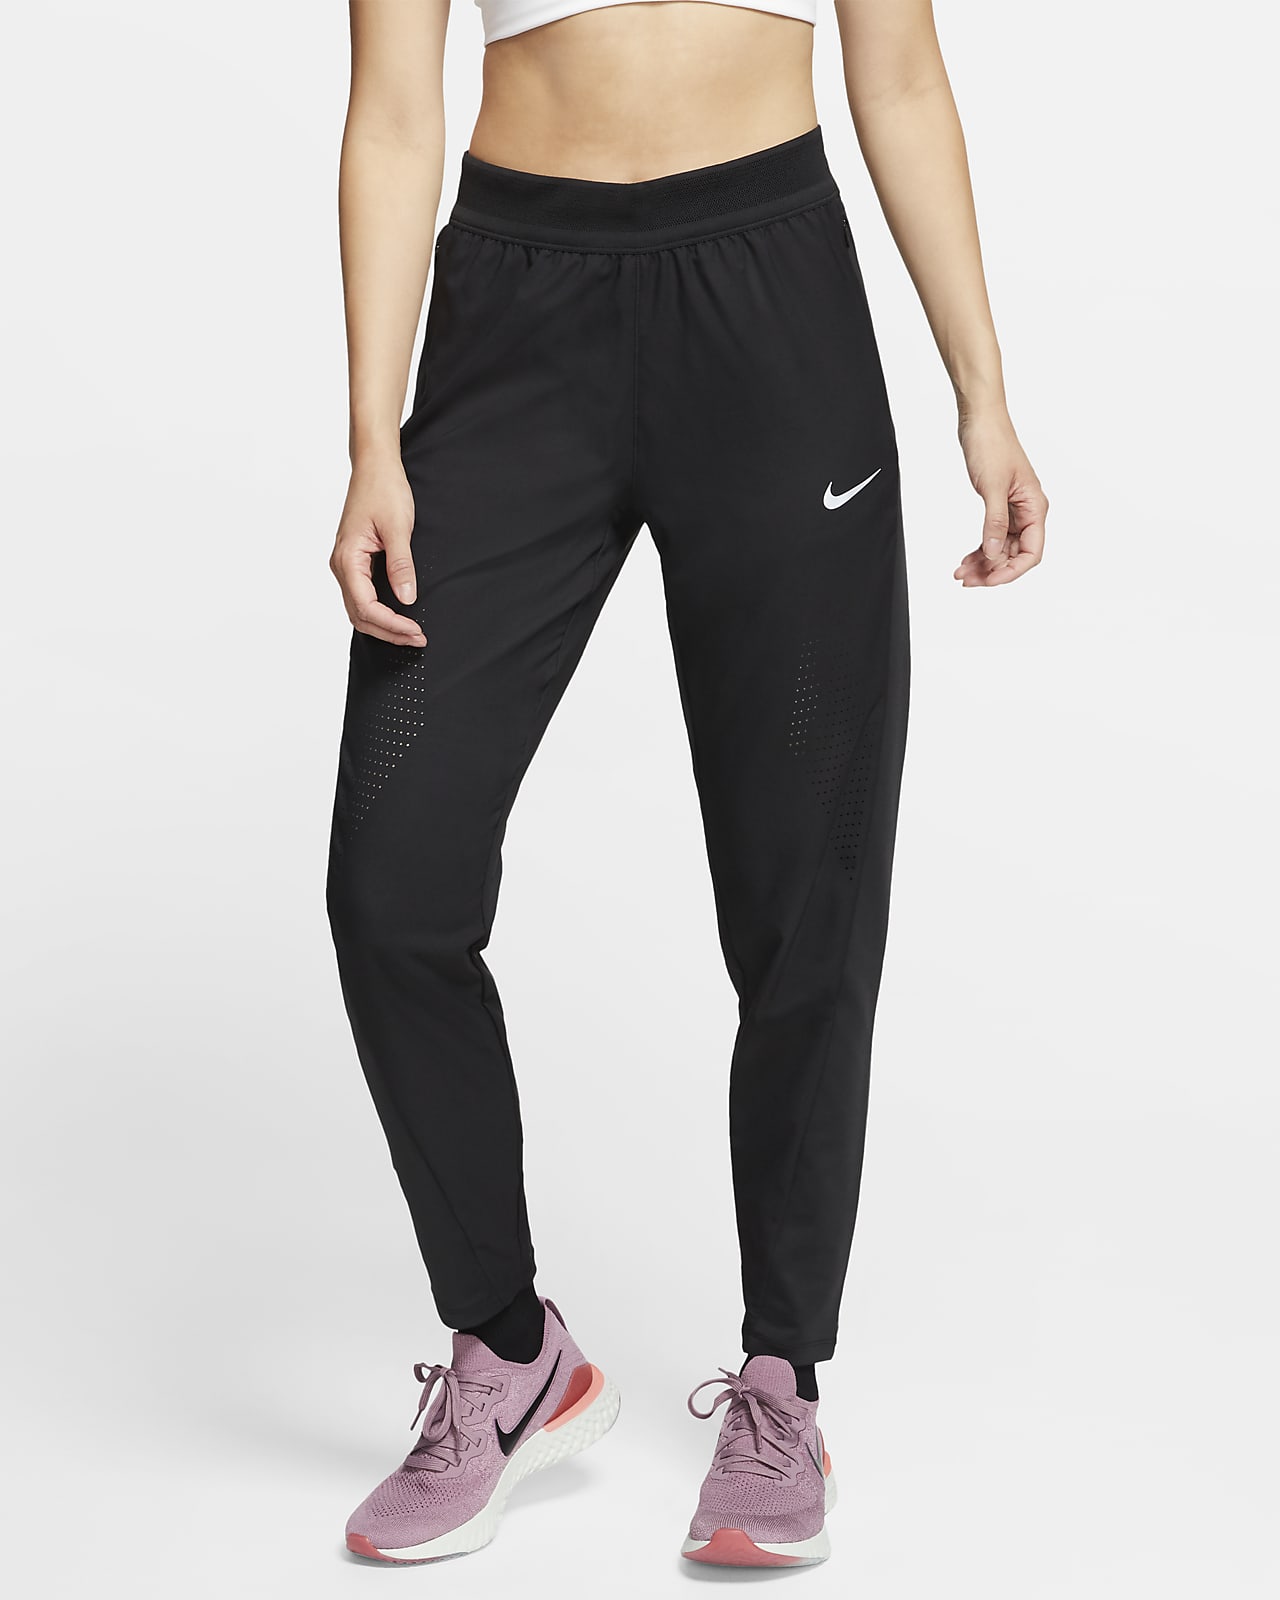 Nike Swift Women's Running Trousers. Nike SG